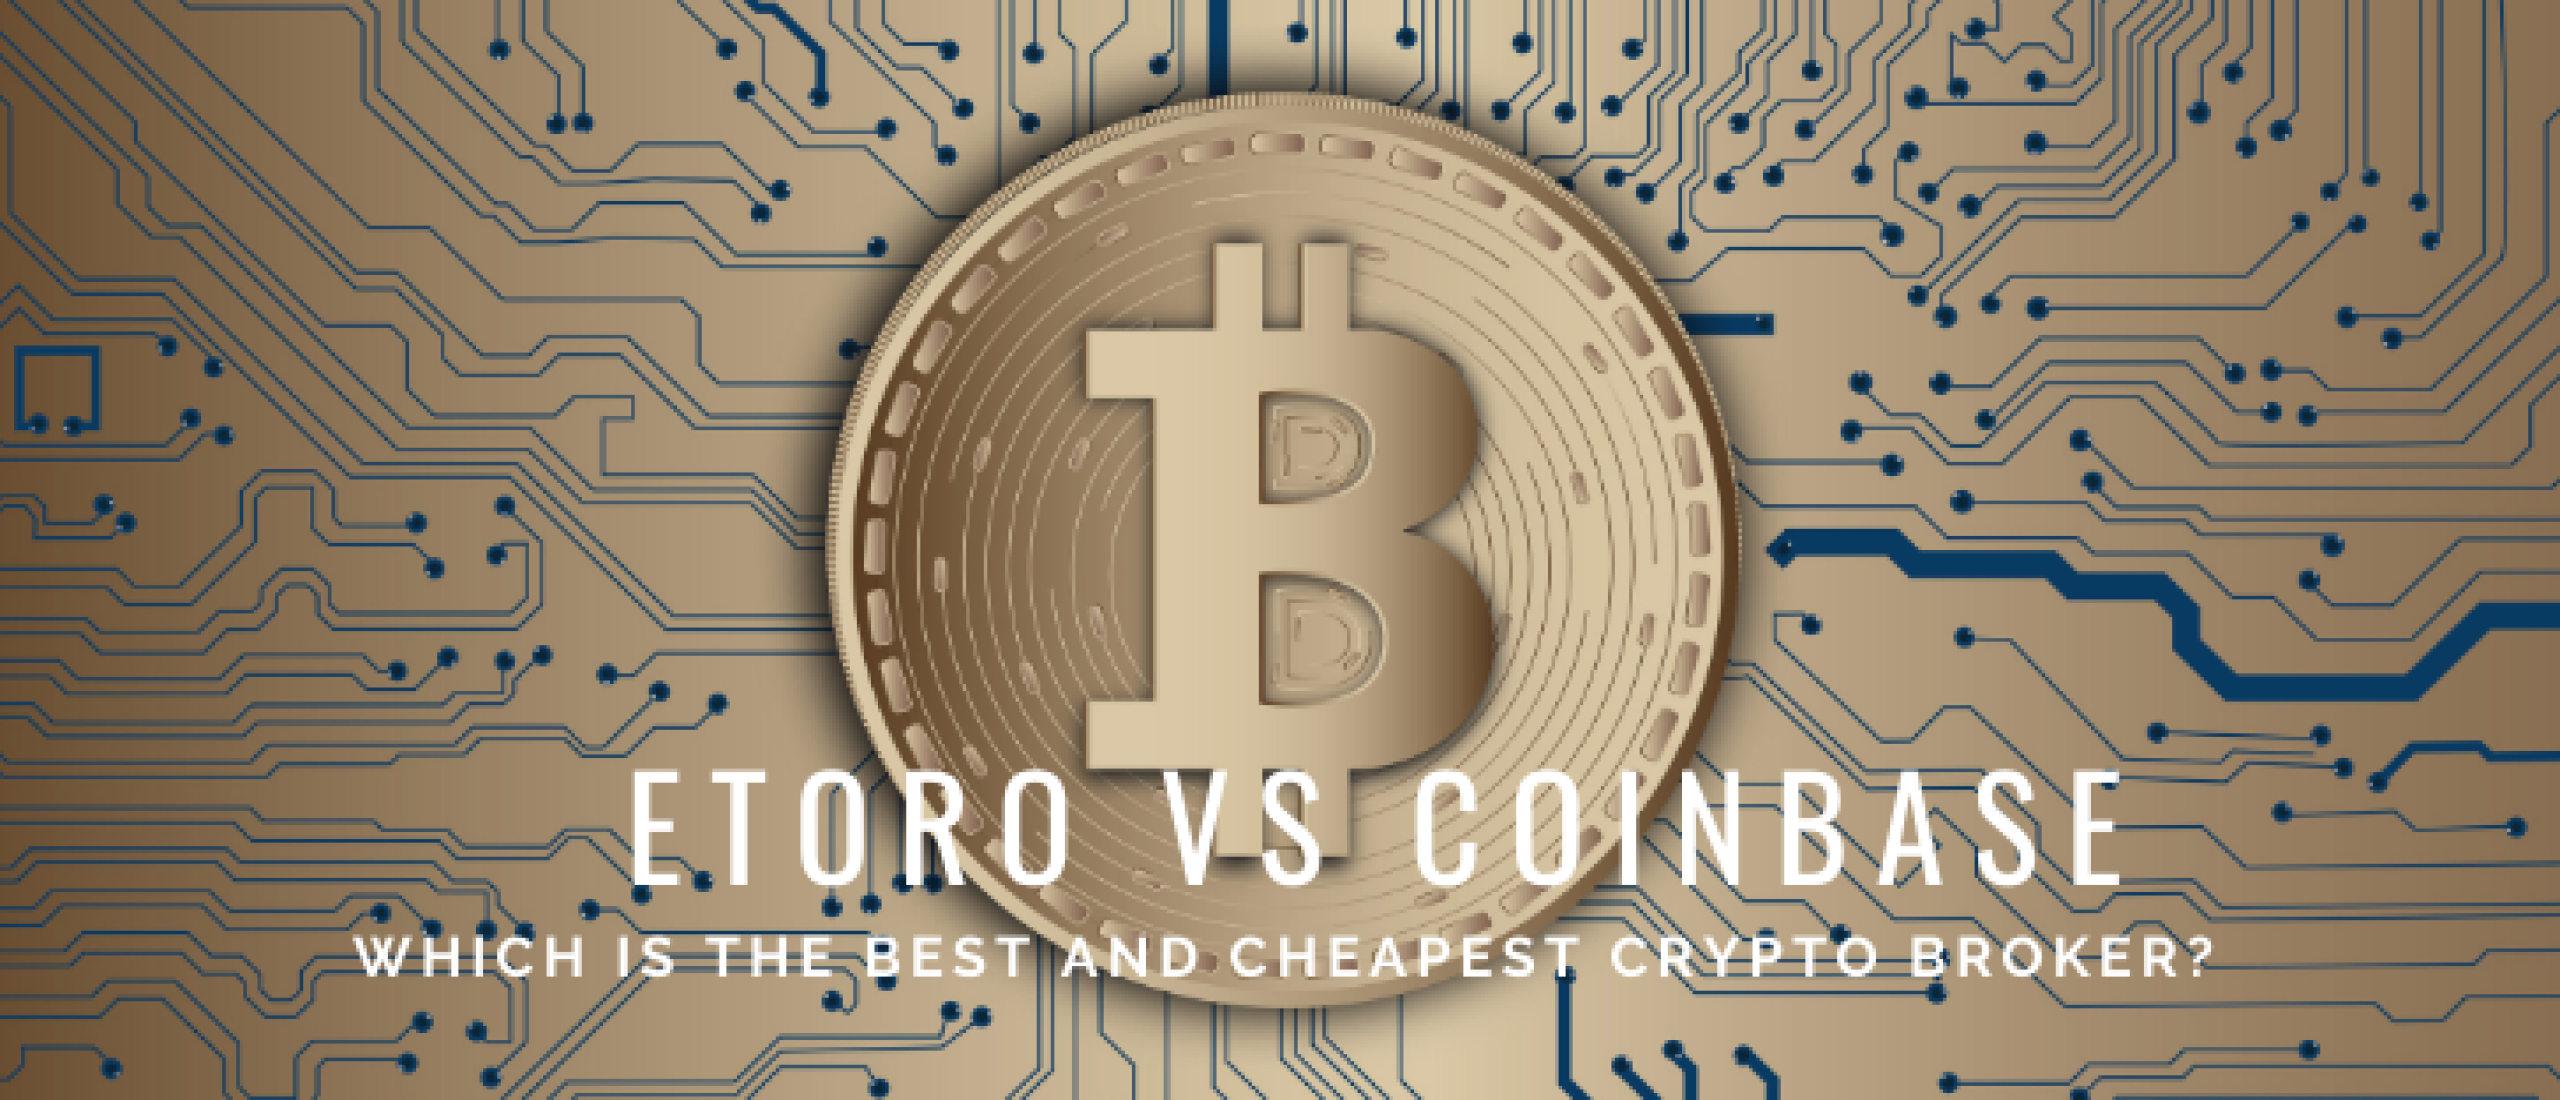 Compare eToro vs. Coinbase to Buy Crypto: Cheapest Choice?